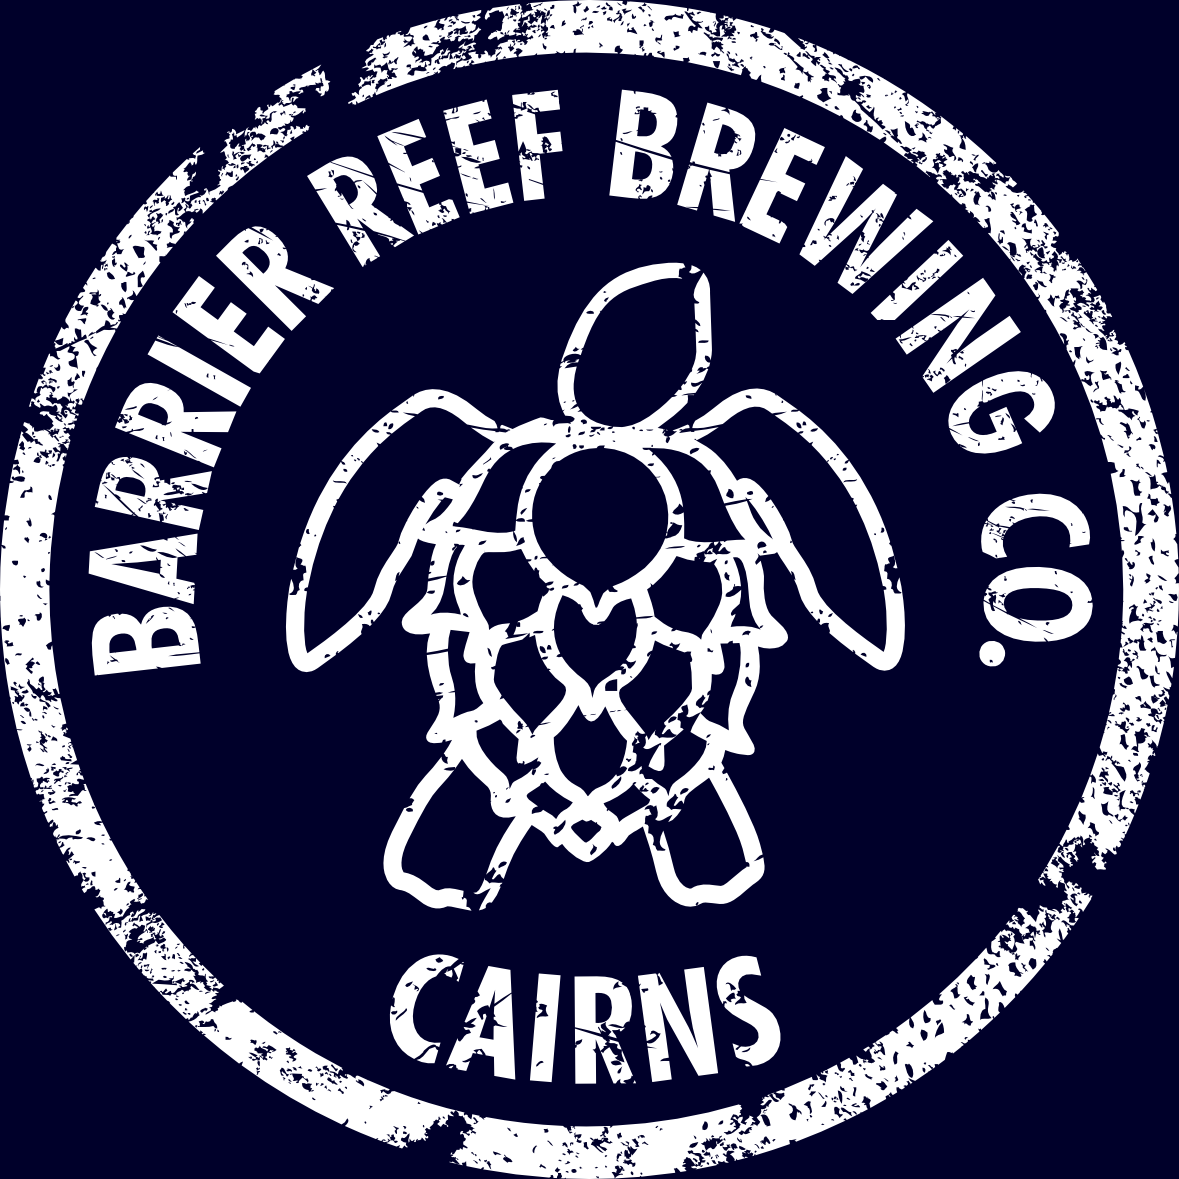 Barrier Reef Brewing Co.